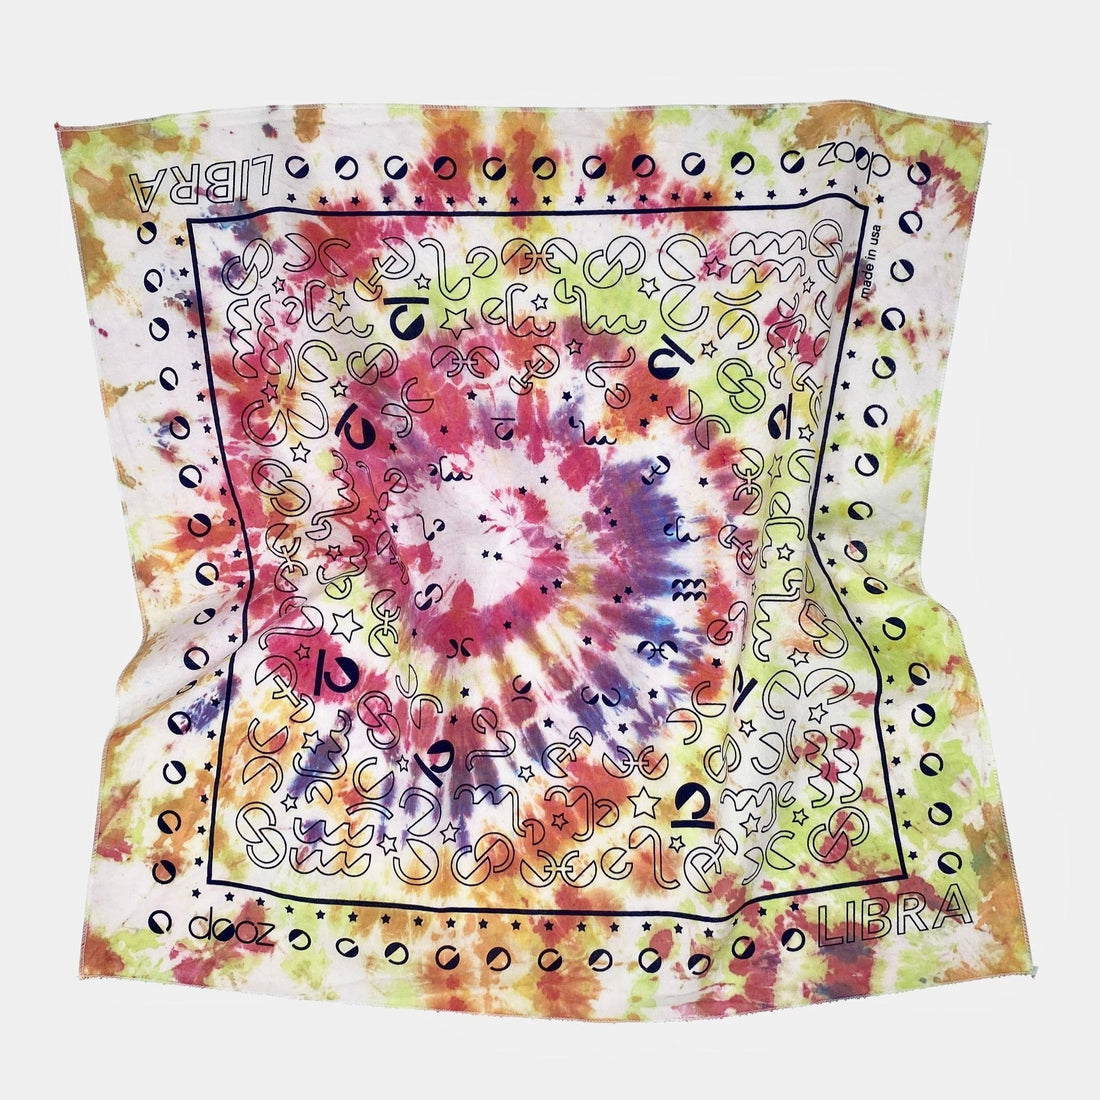 Dooz Libra screen printed cotton bandana in rainbow tie dye